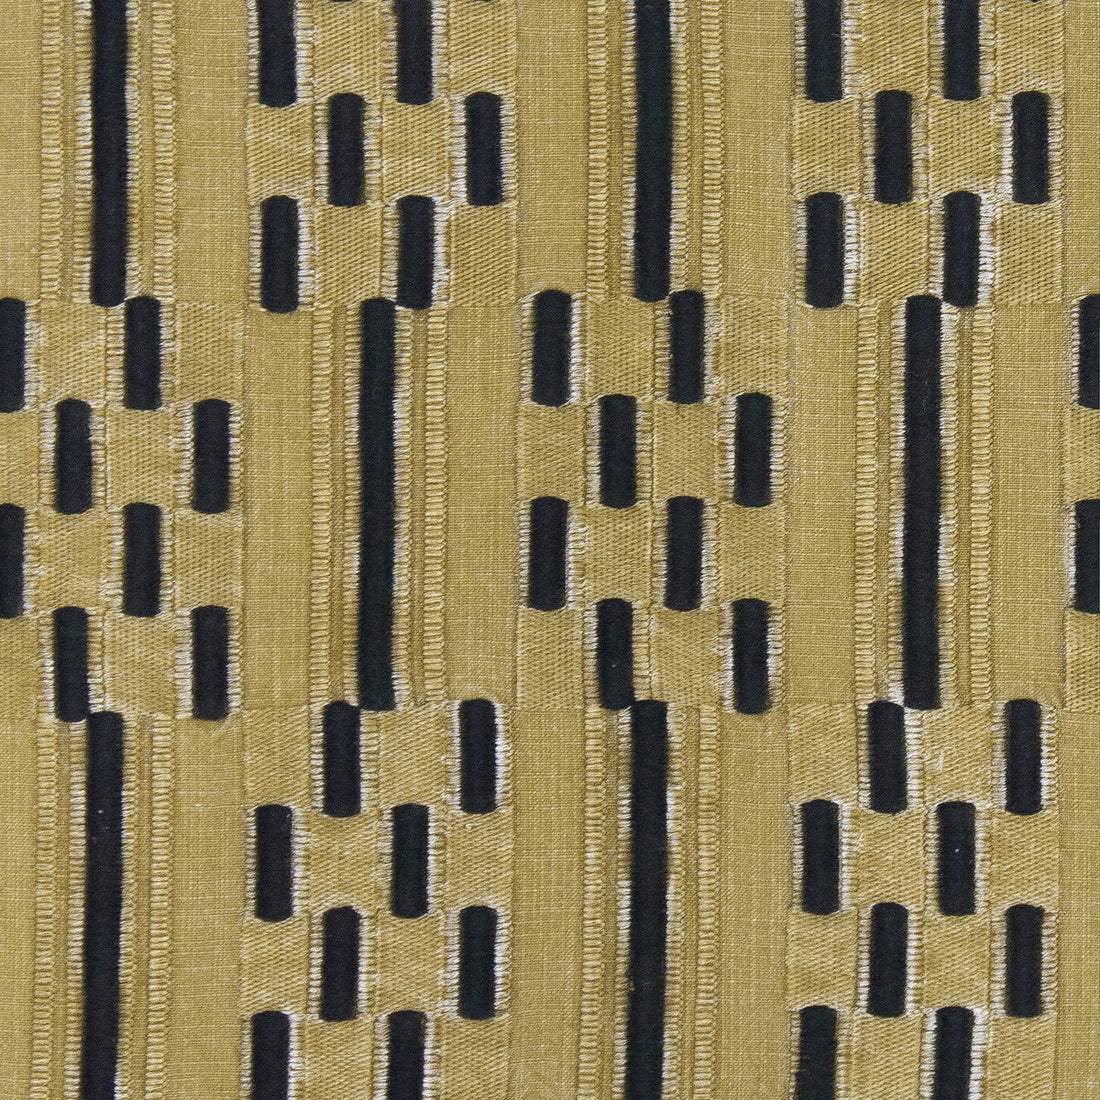 Santa Maria fabric in ocre color - pattern GDT5598.002.0 - by Gaston y Daniela in the Gaston Nuevo Mundo collection